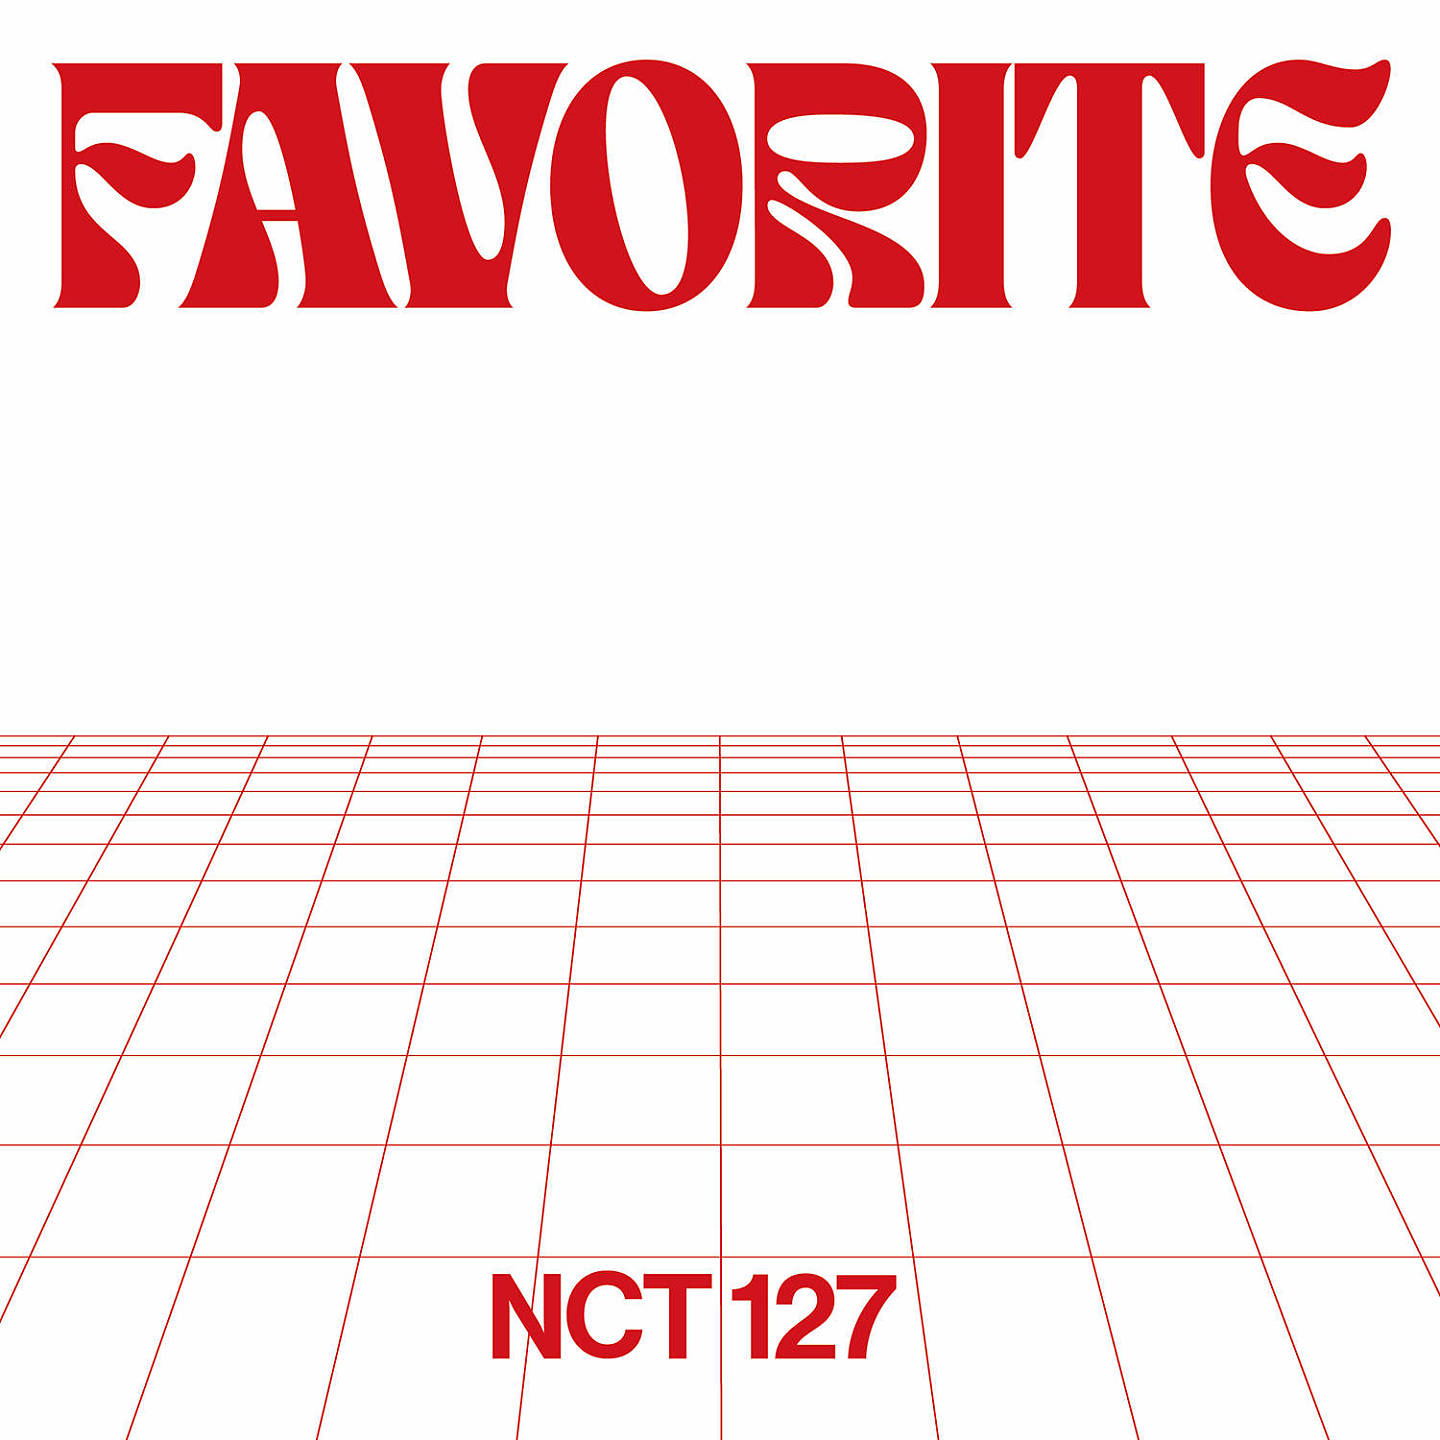 NCT 127正规3辑后续专辑《Favorite》将于10月25日发行！今日开启预售！ - 1